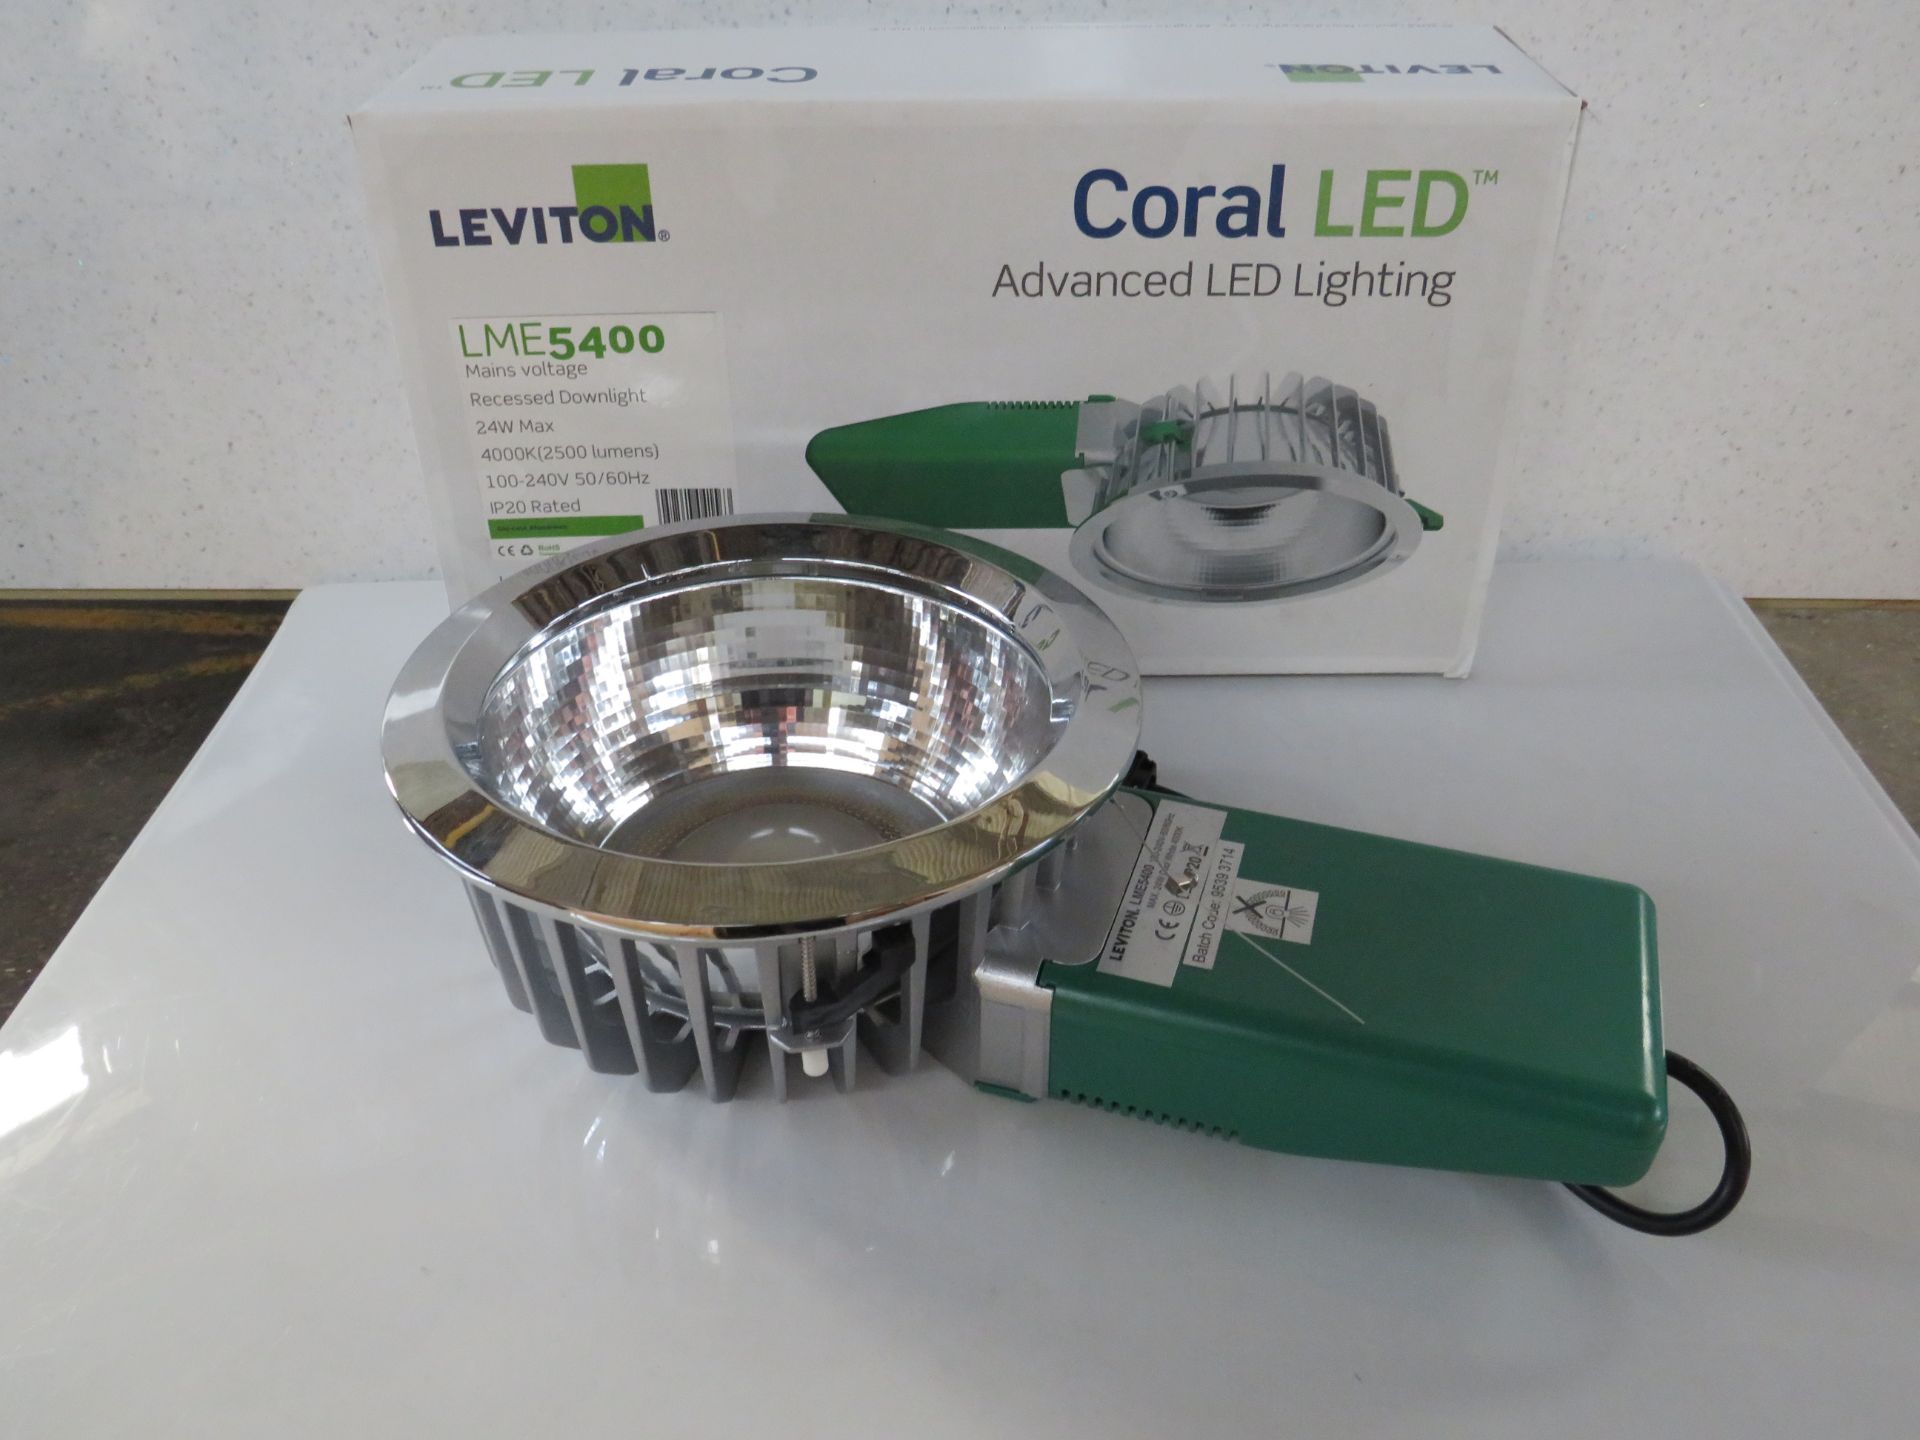 4x Leviton - Coral LED Advanced LED Lighting ( LME5400 ) - Cool White - New & Boxed.